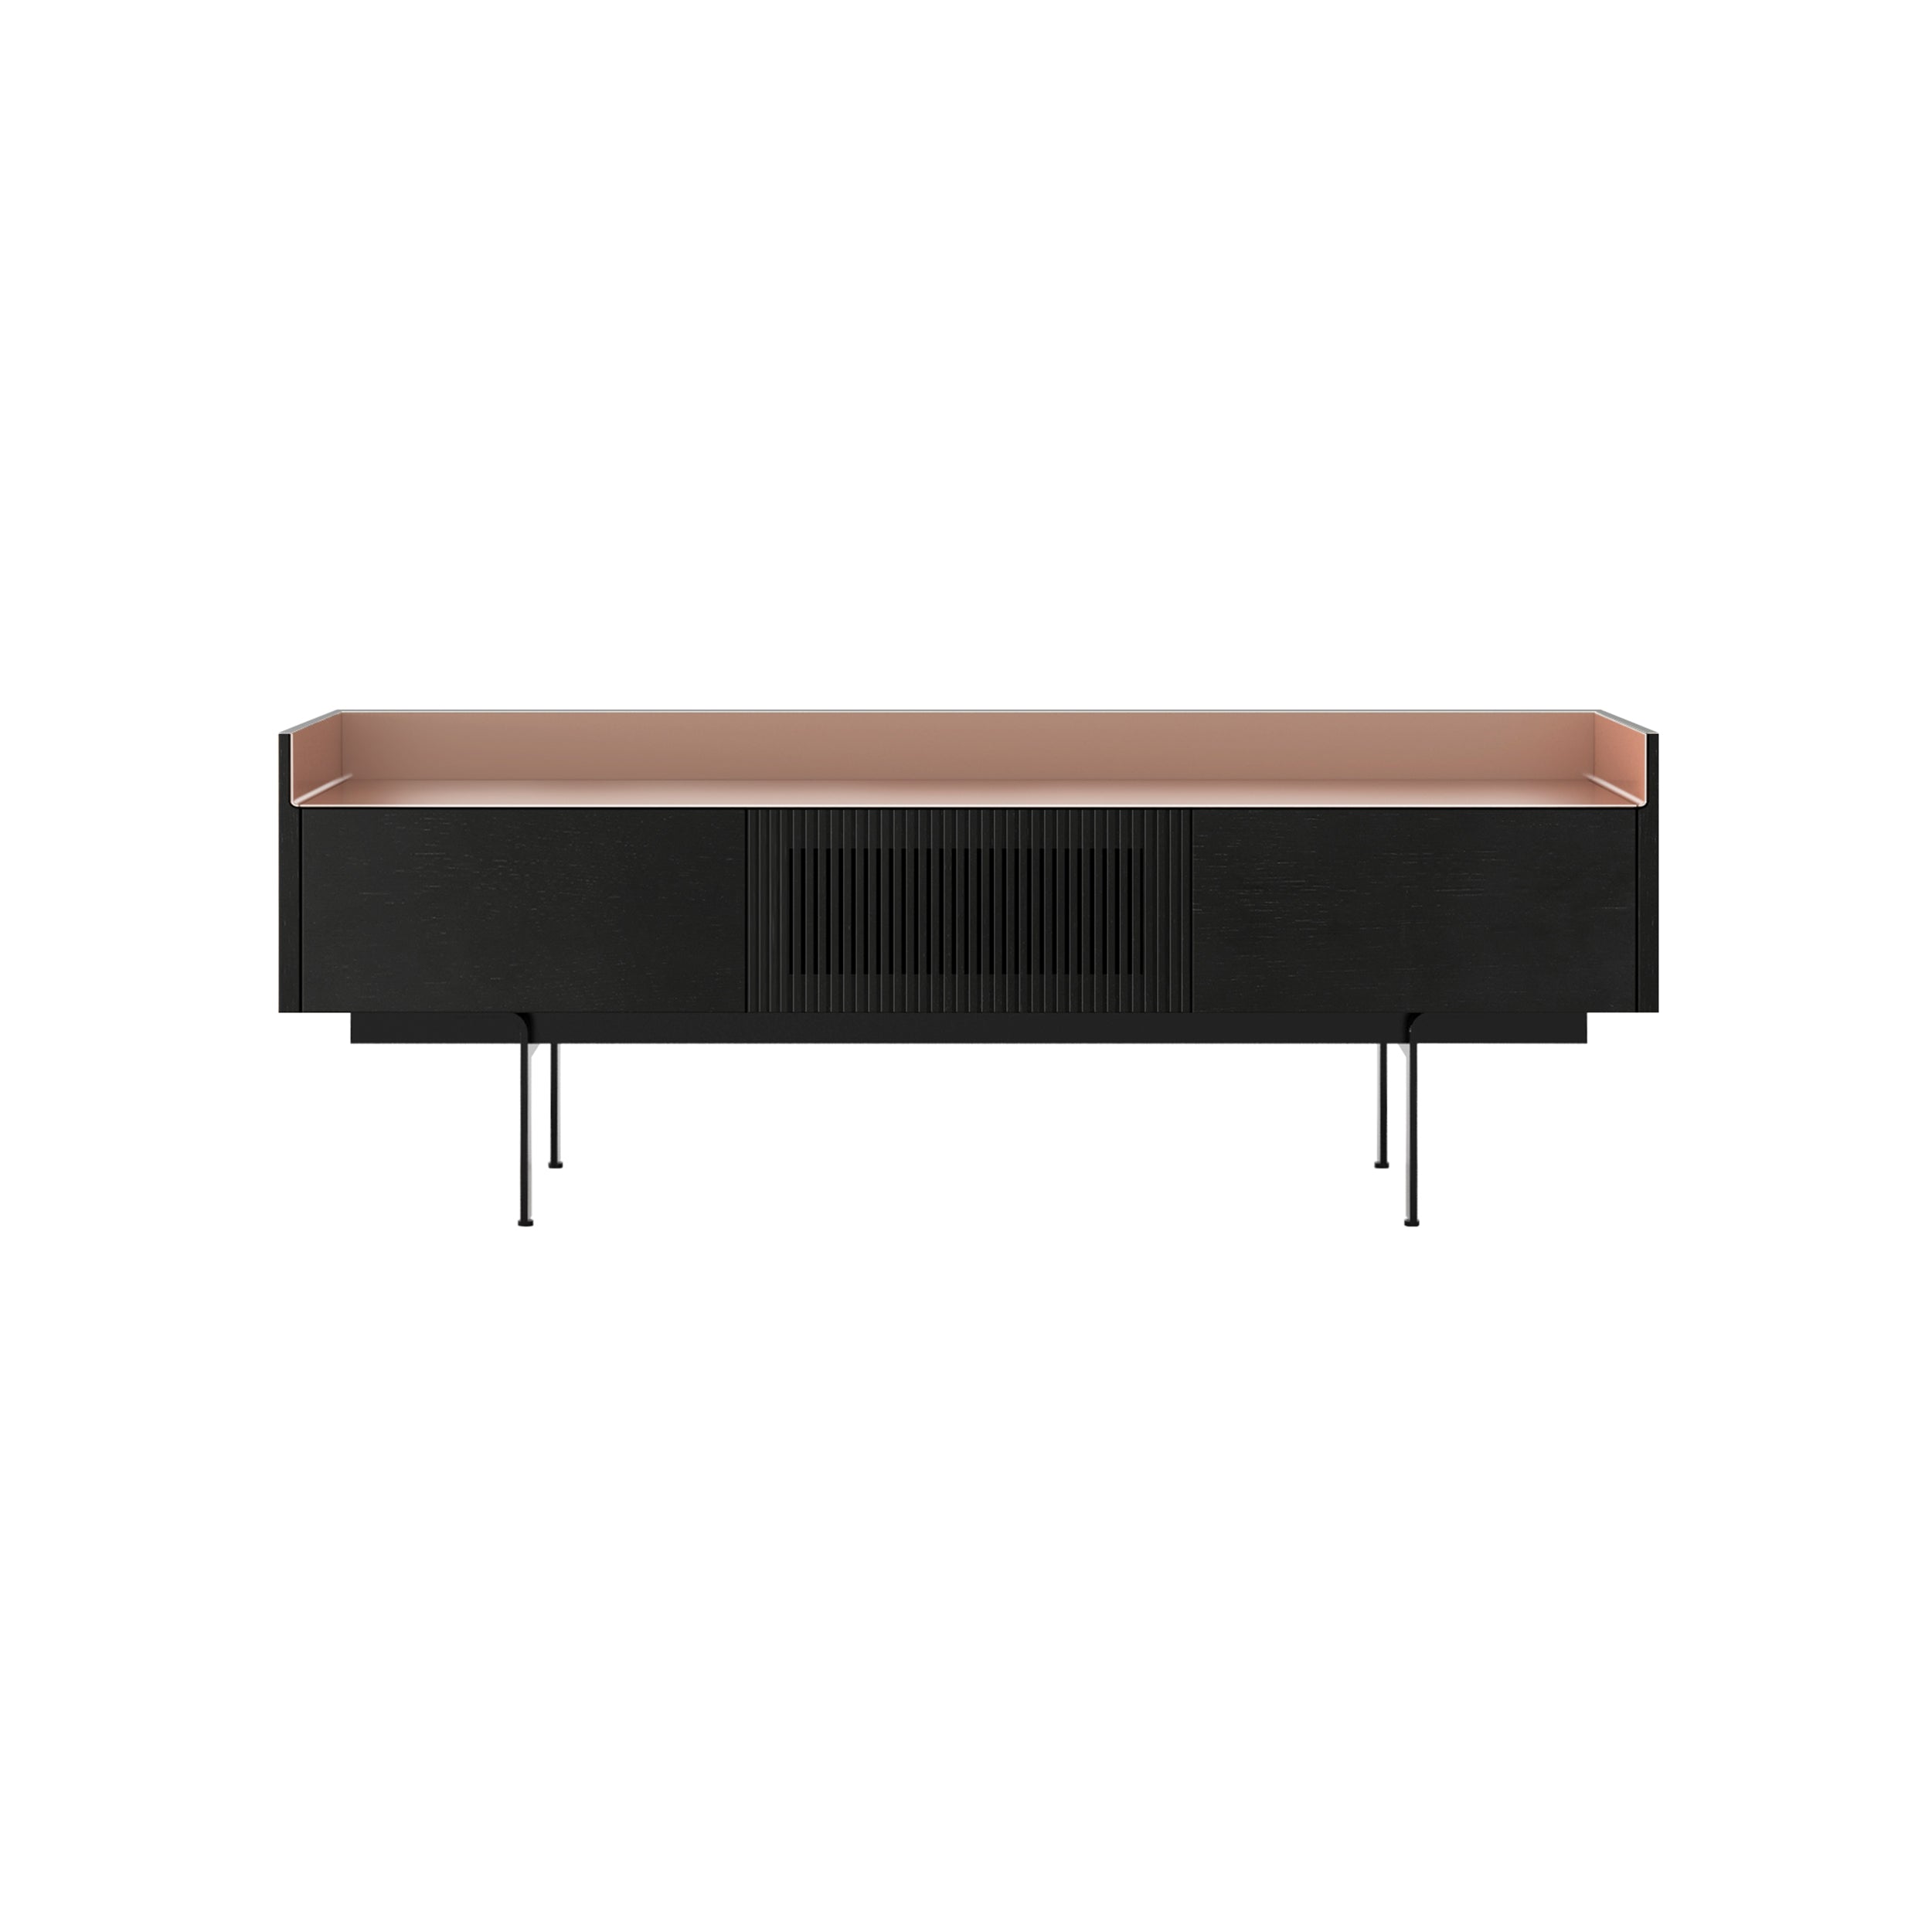 Stockholm Slim Sideboard: STH353 + Ebony Stained Oak + Anodized Aluminum Pale Rose + Black